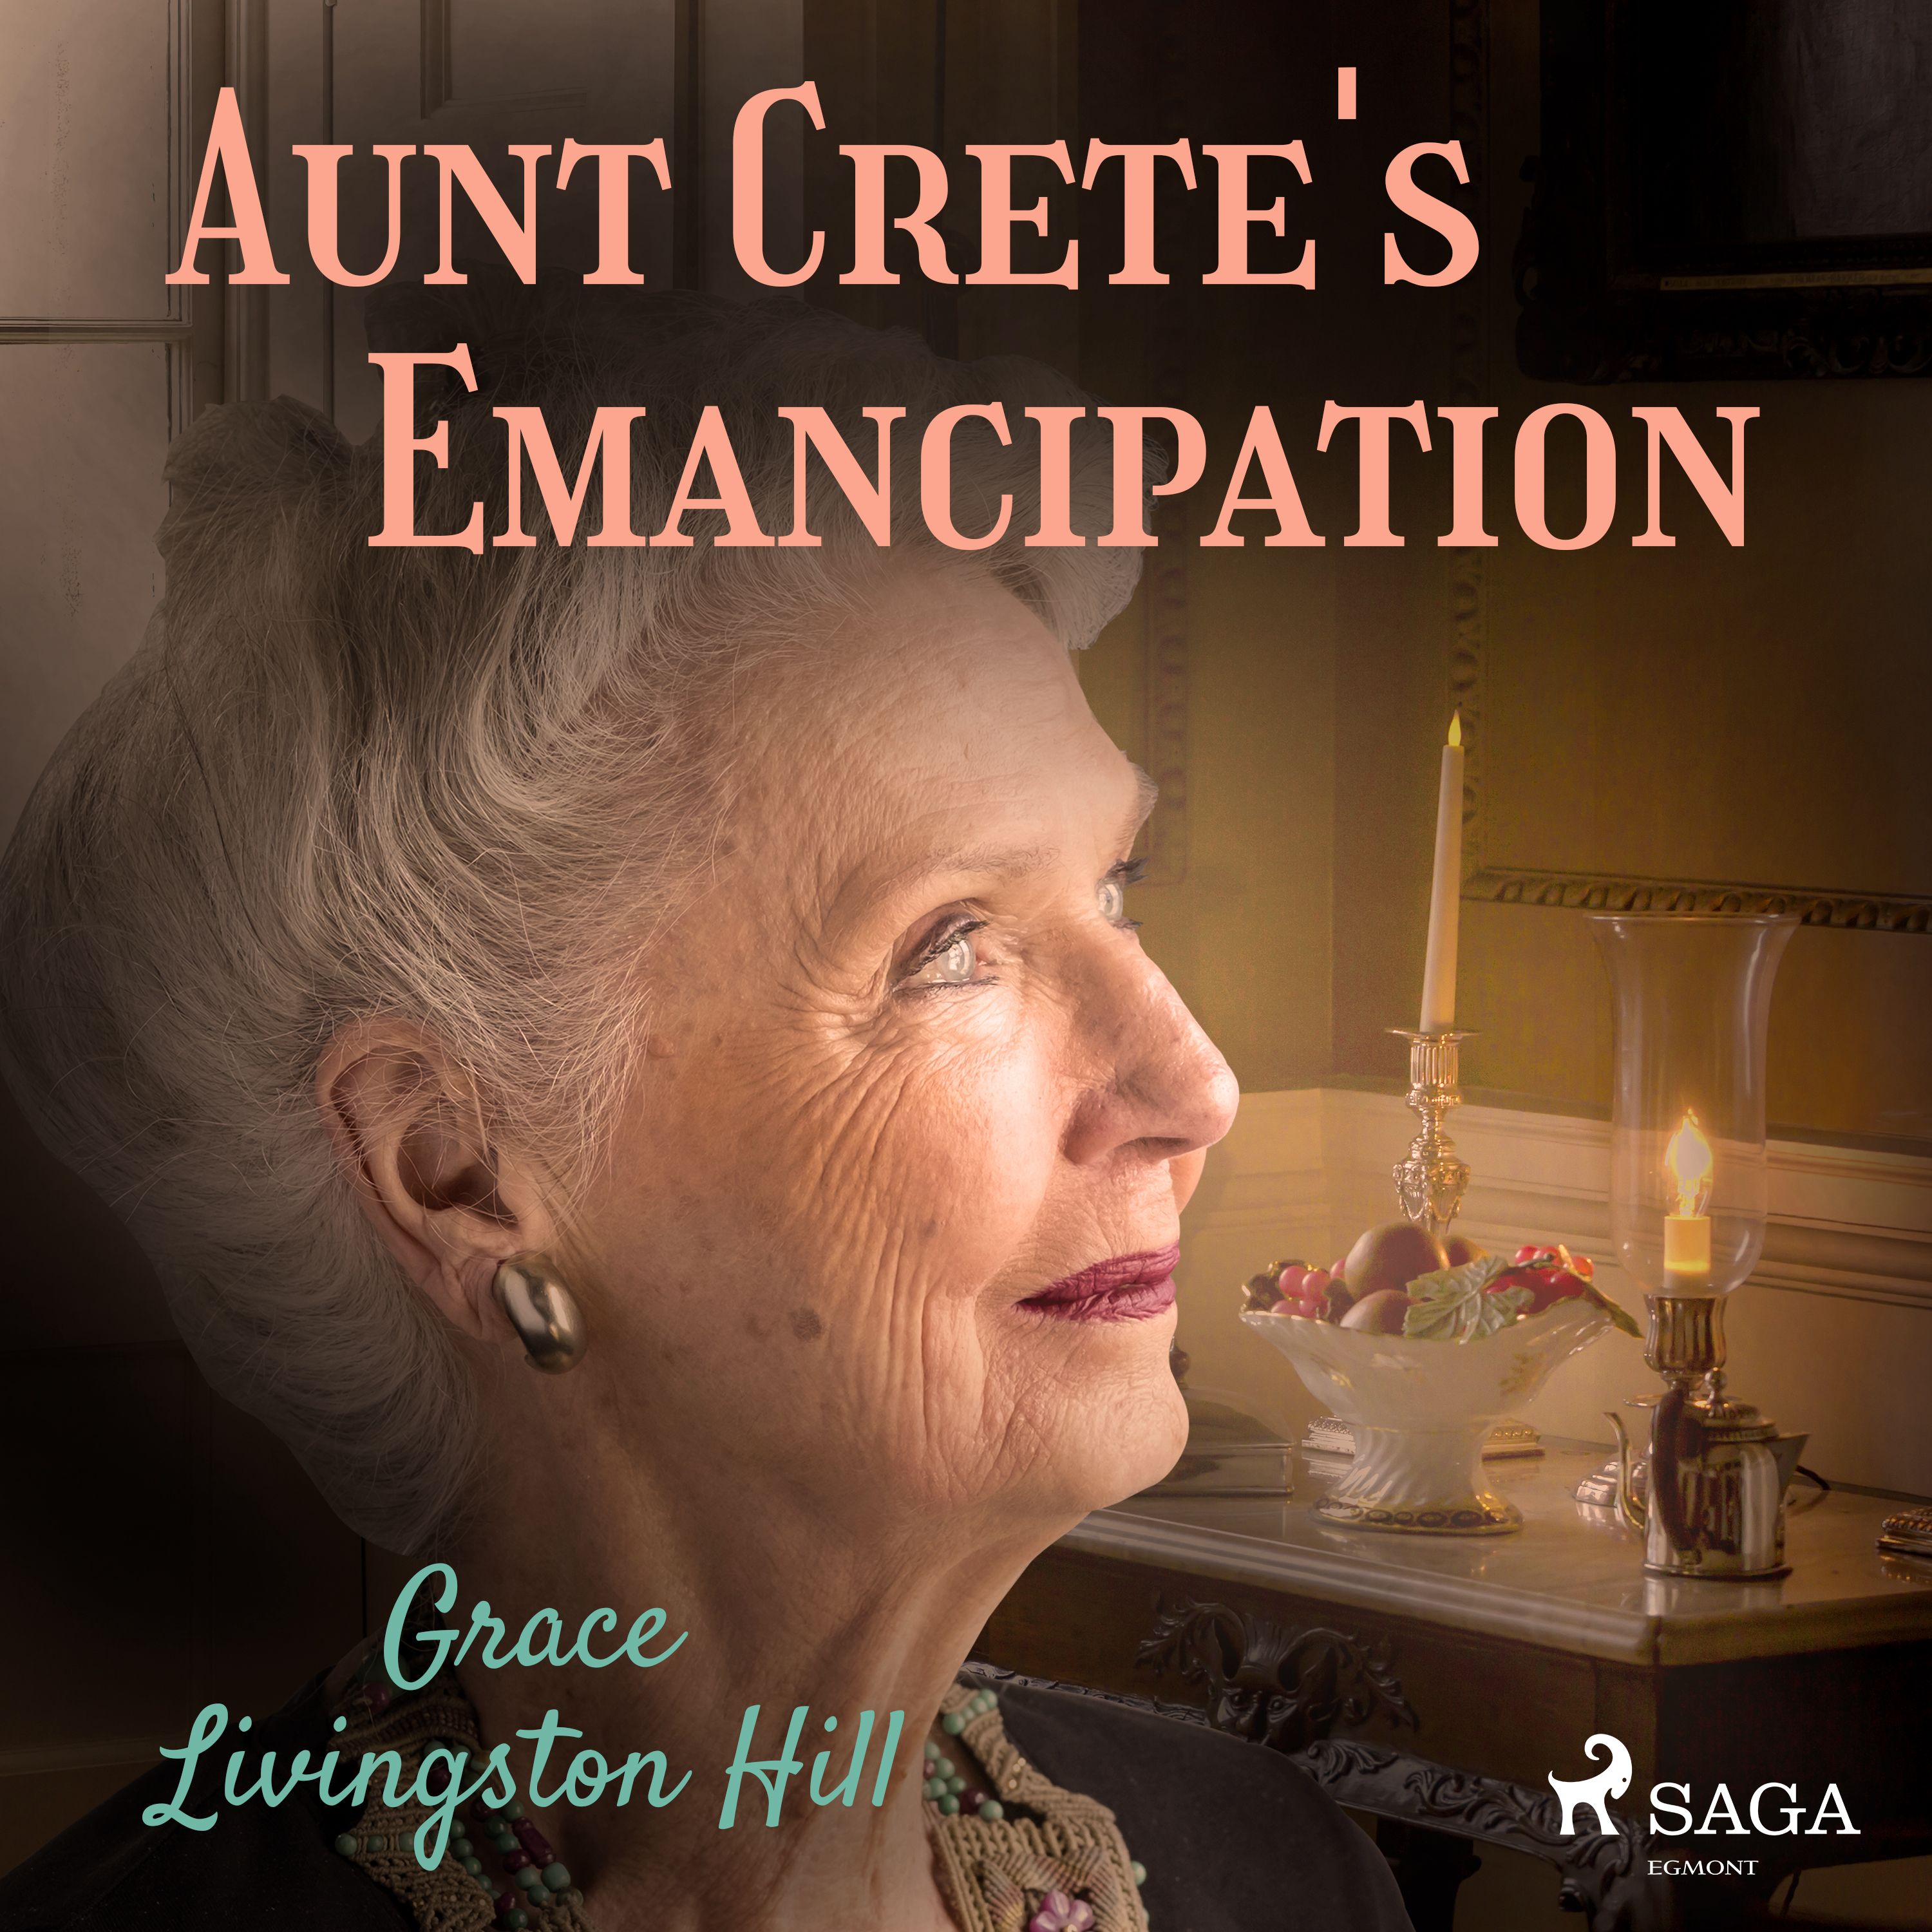 Aunt Crete's Emancipation, ljudbok av Grace Livingston Hill